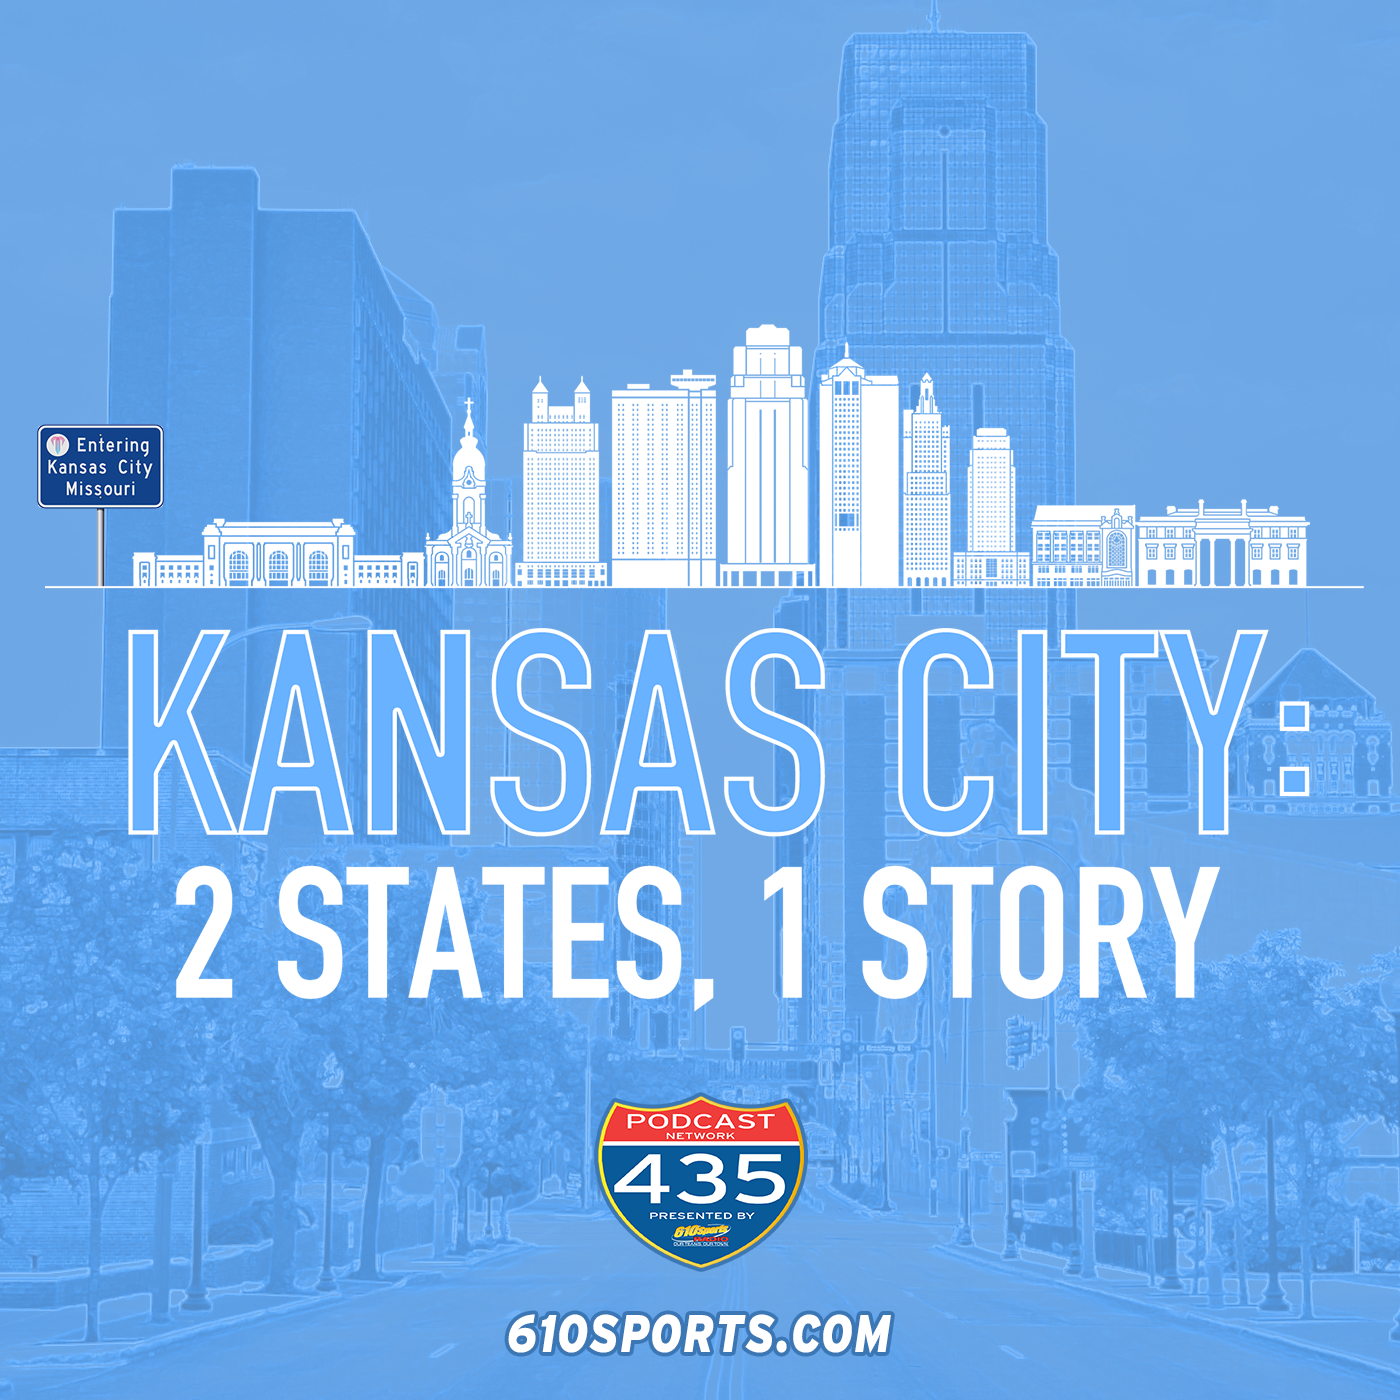 10/18 Kansas city: 2 States, 1 Story